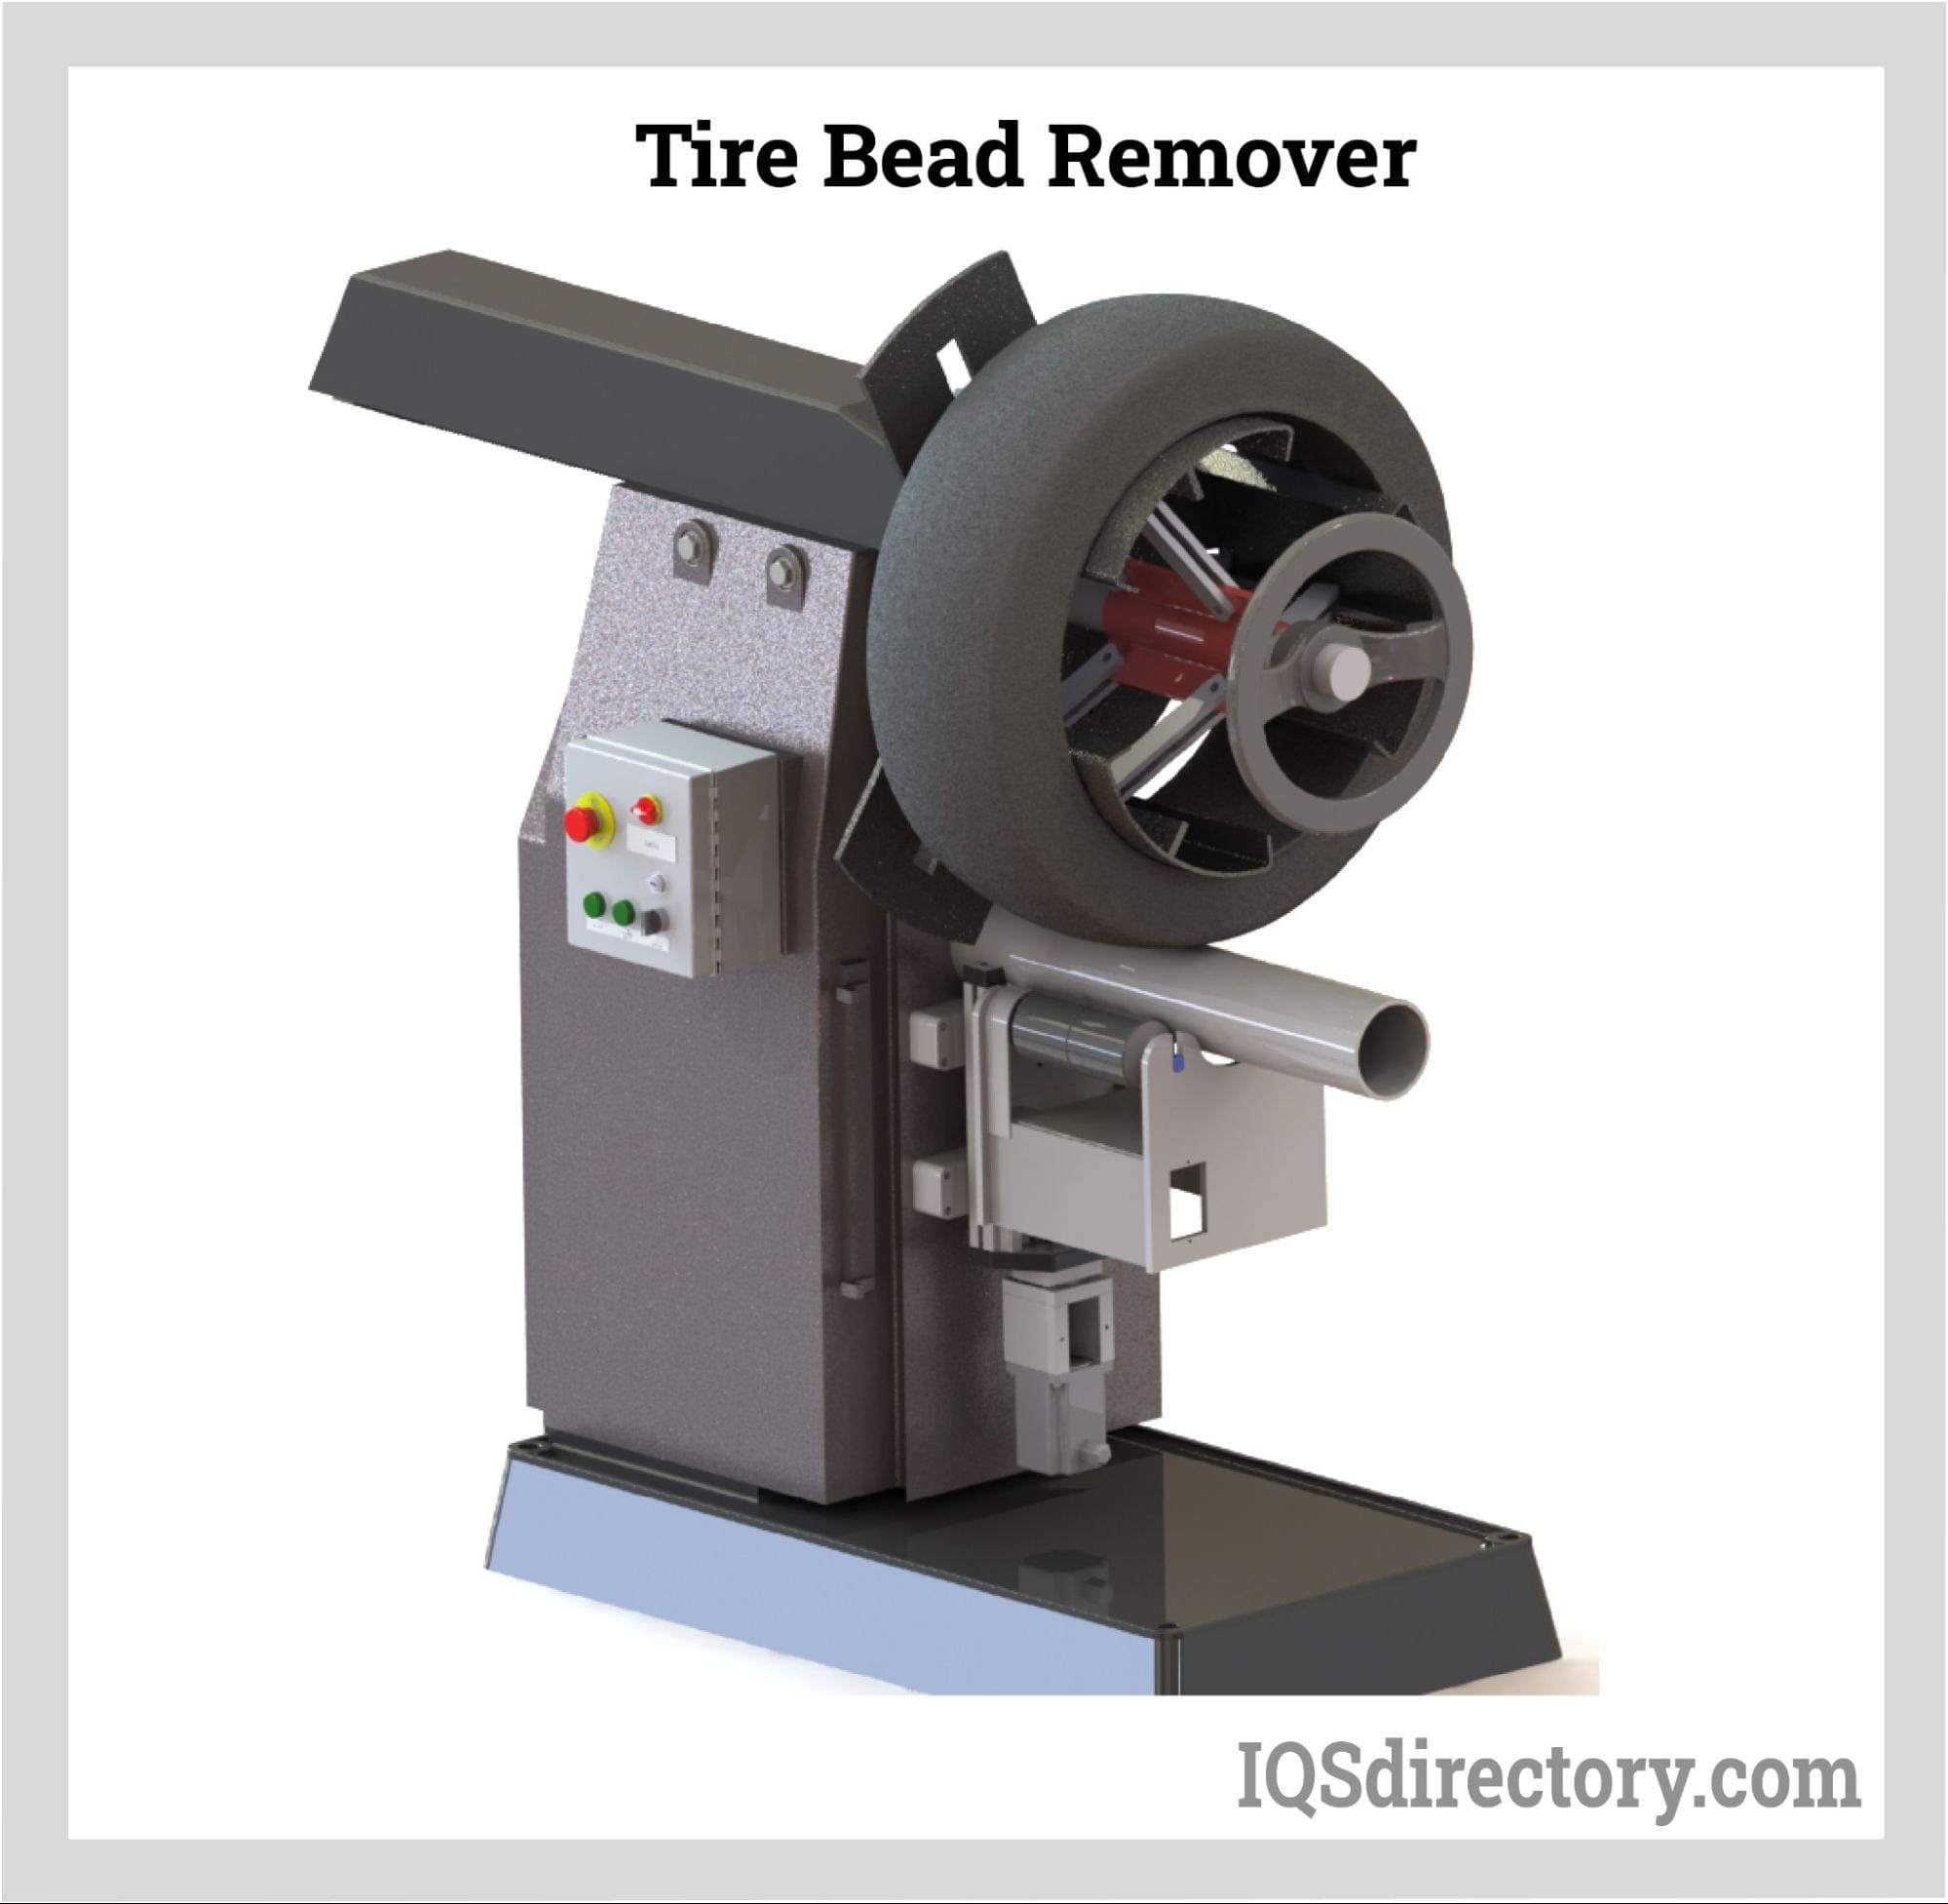 Tire Bead Remover